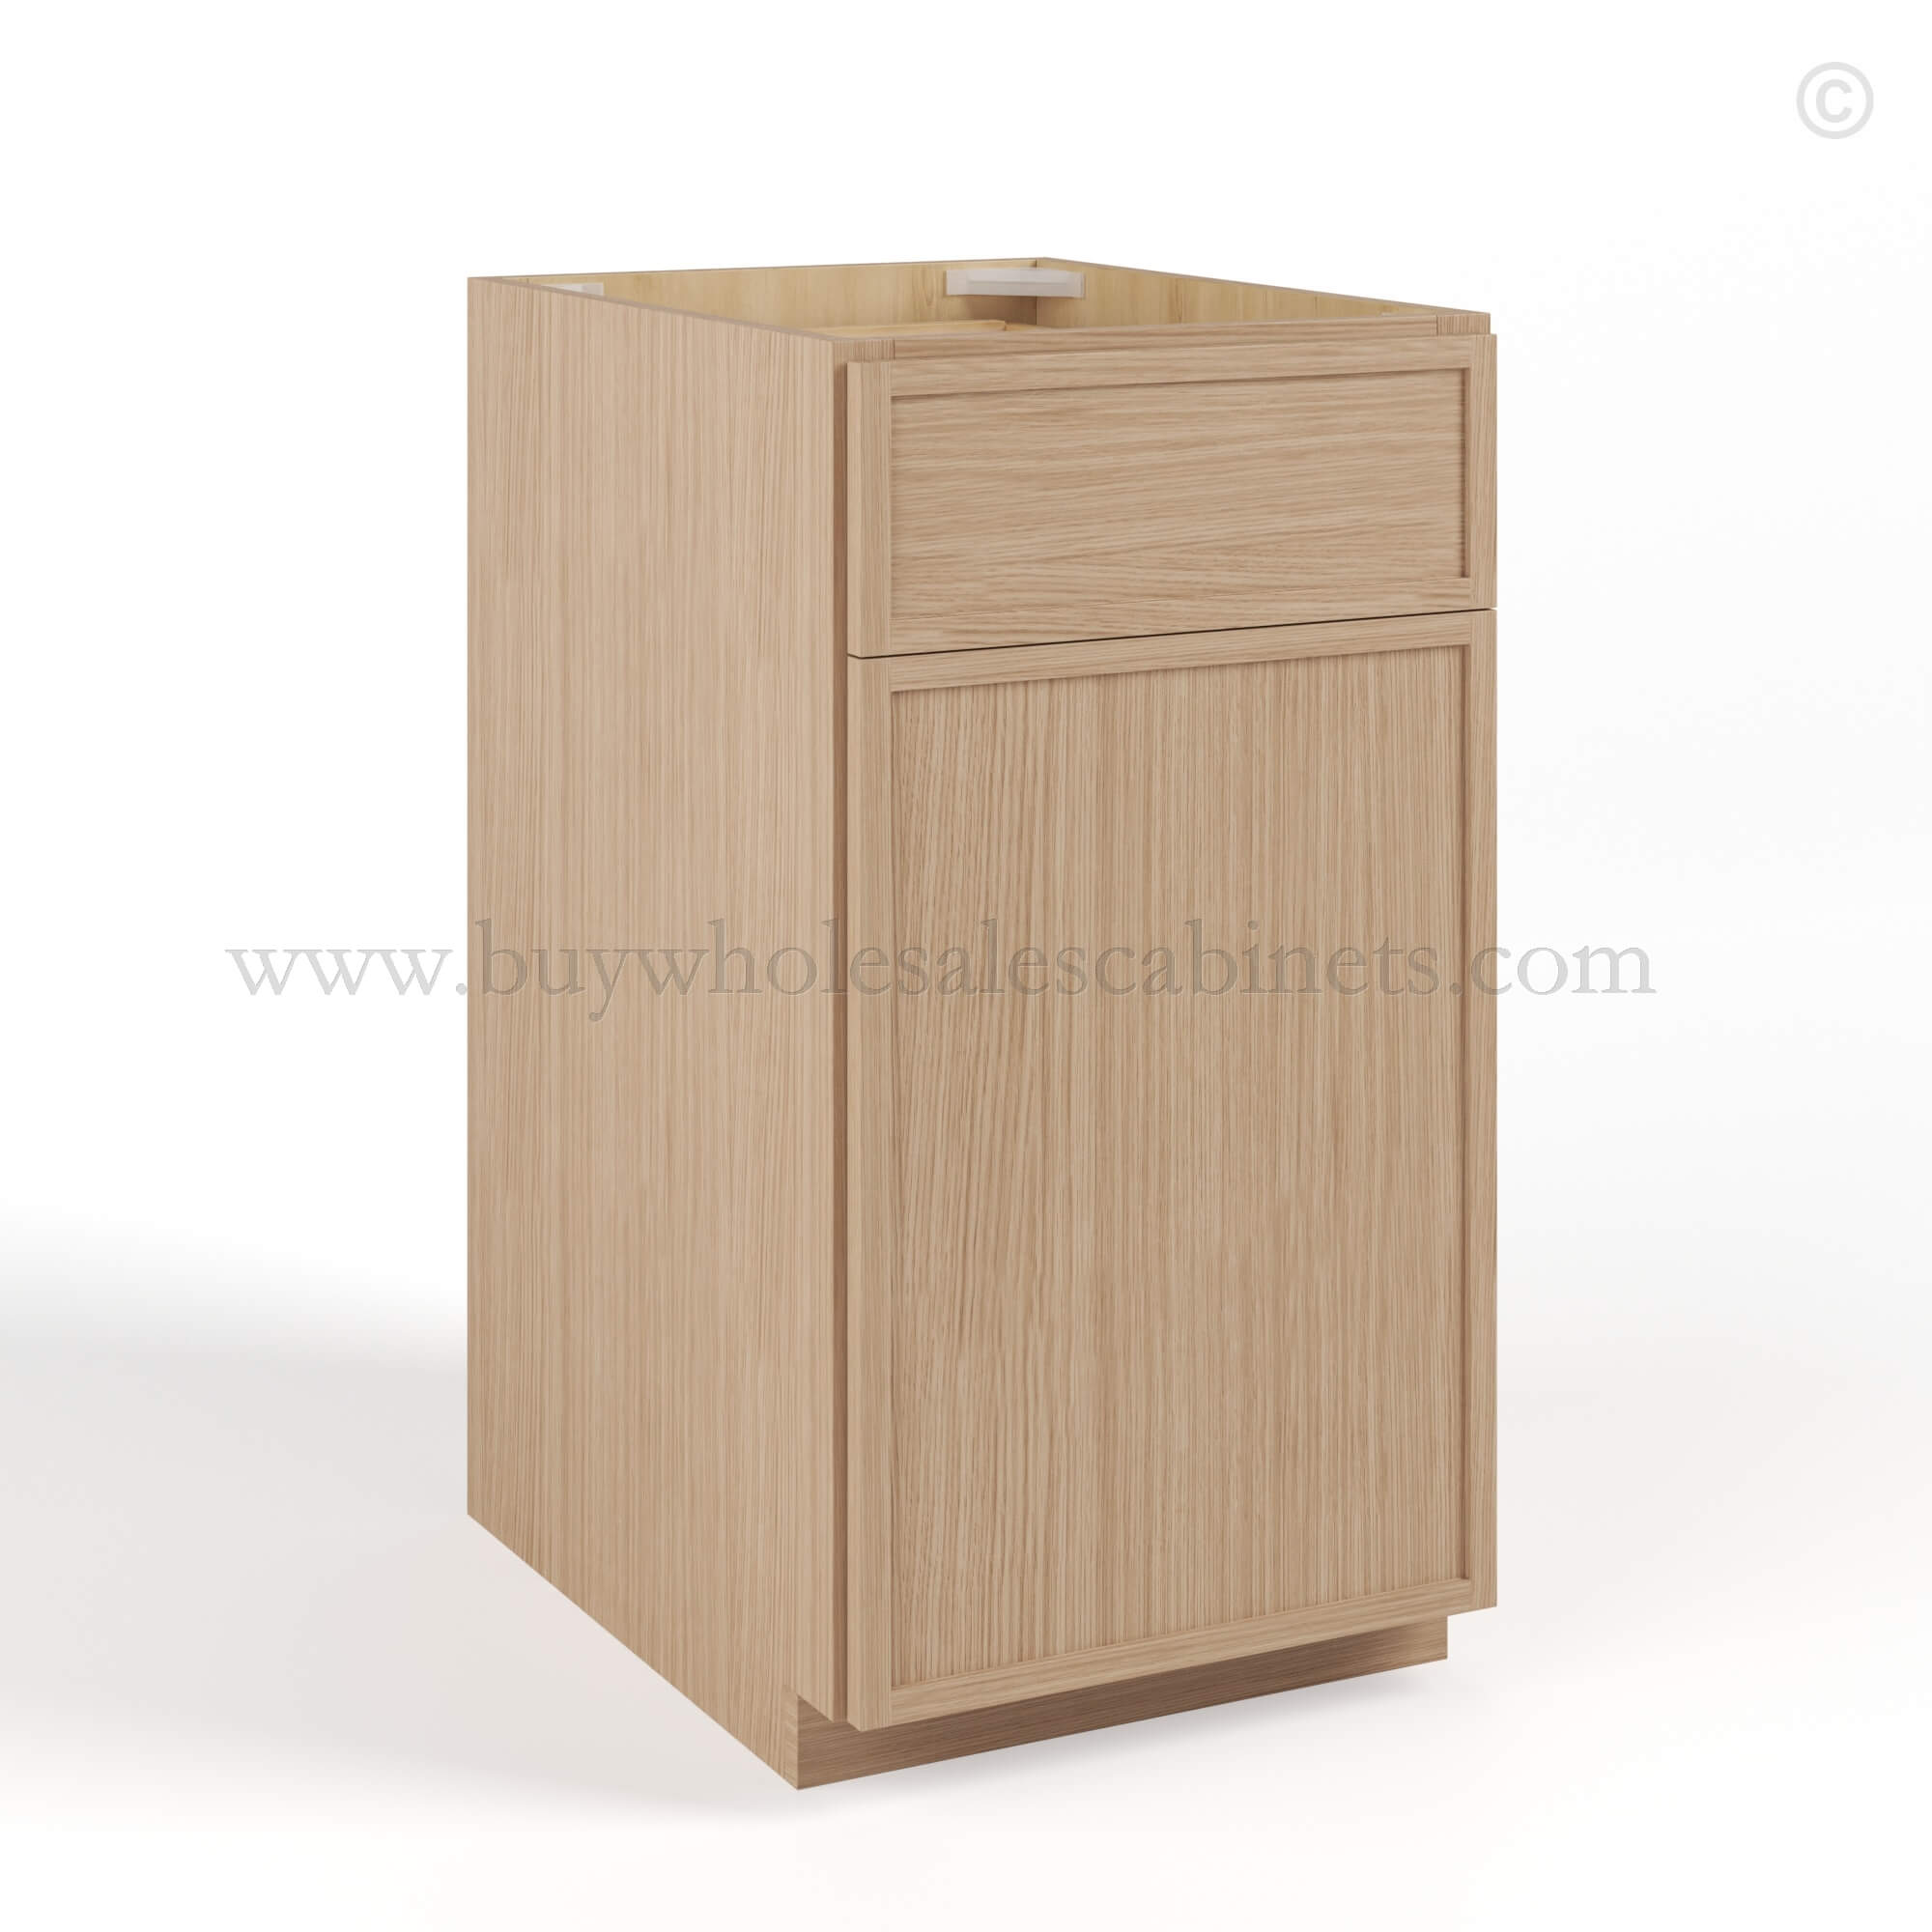 Slim Oak Shaker Base Cabinet Single Door and Drawer, rta cabinets, wholesale cabinets